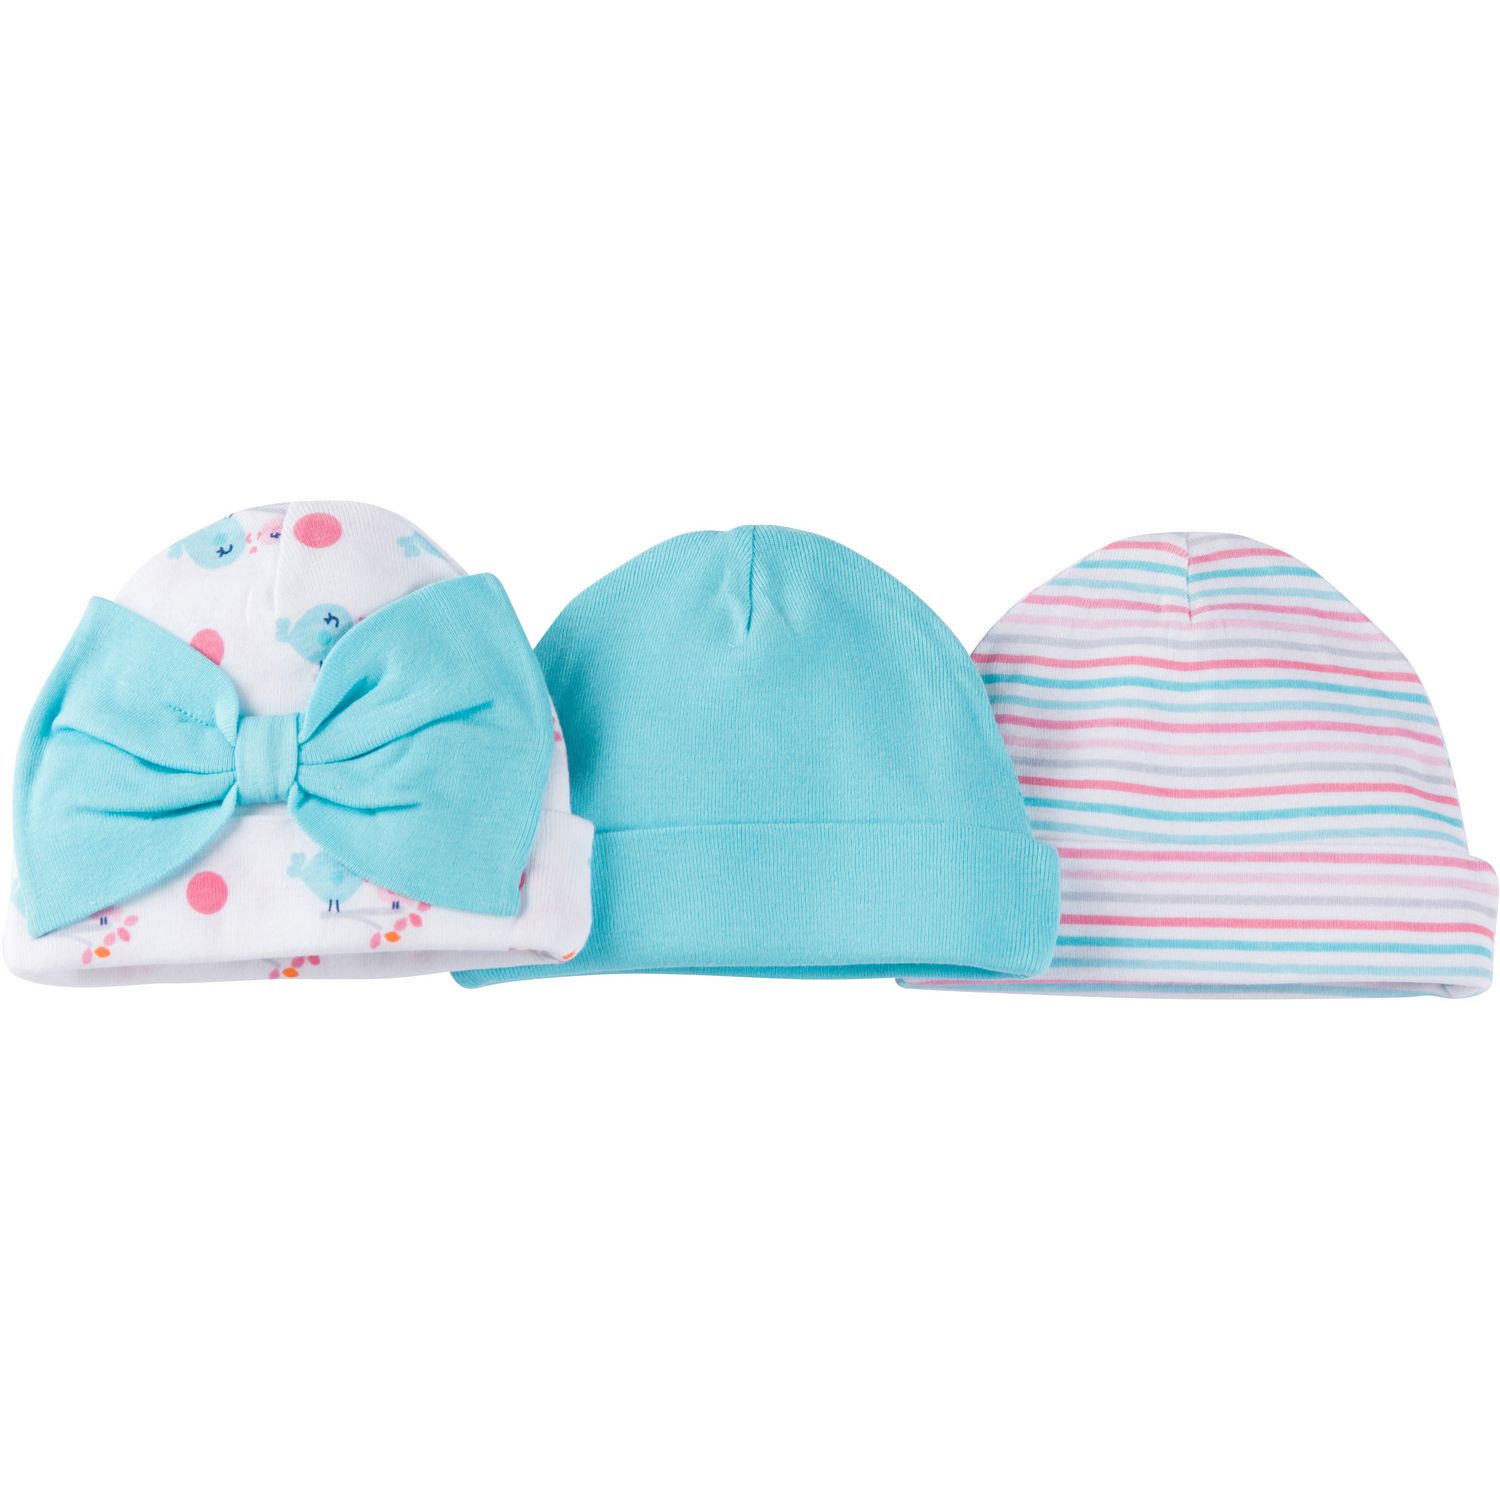 Gerber Newborn Girl’s cap- Pack of 3 | Walmart Canada